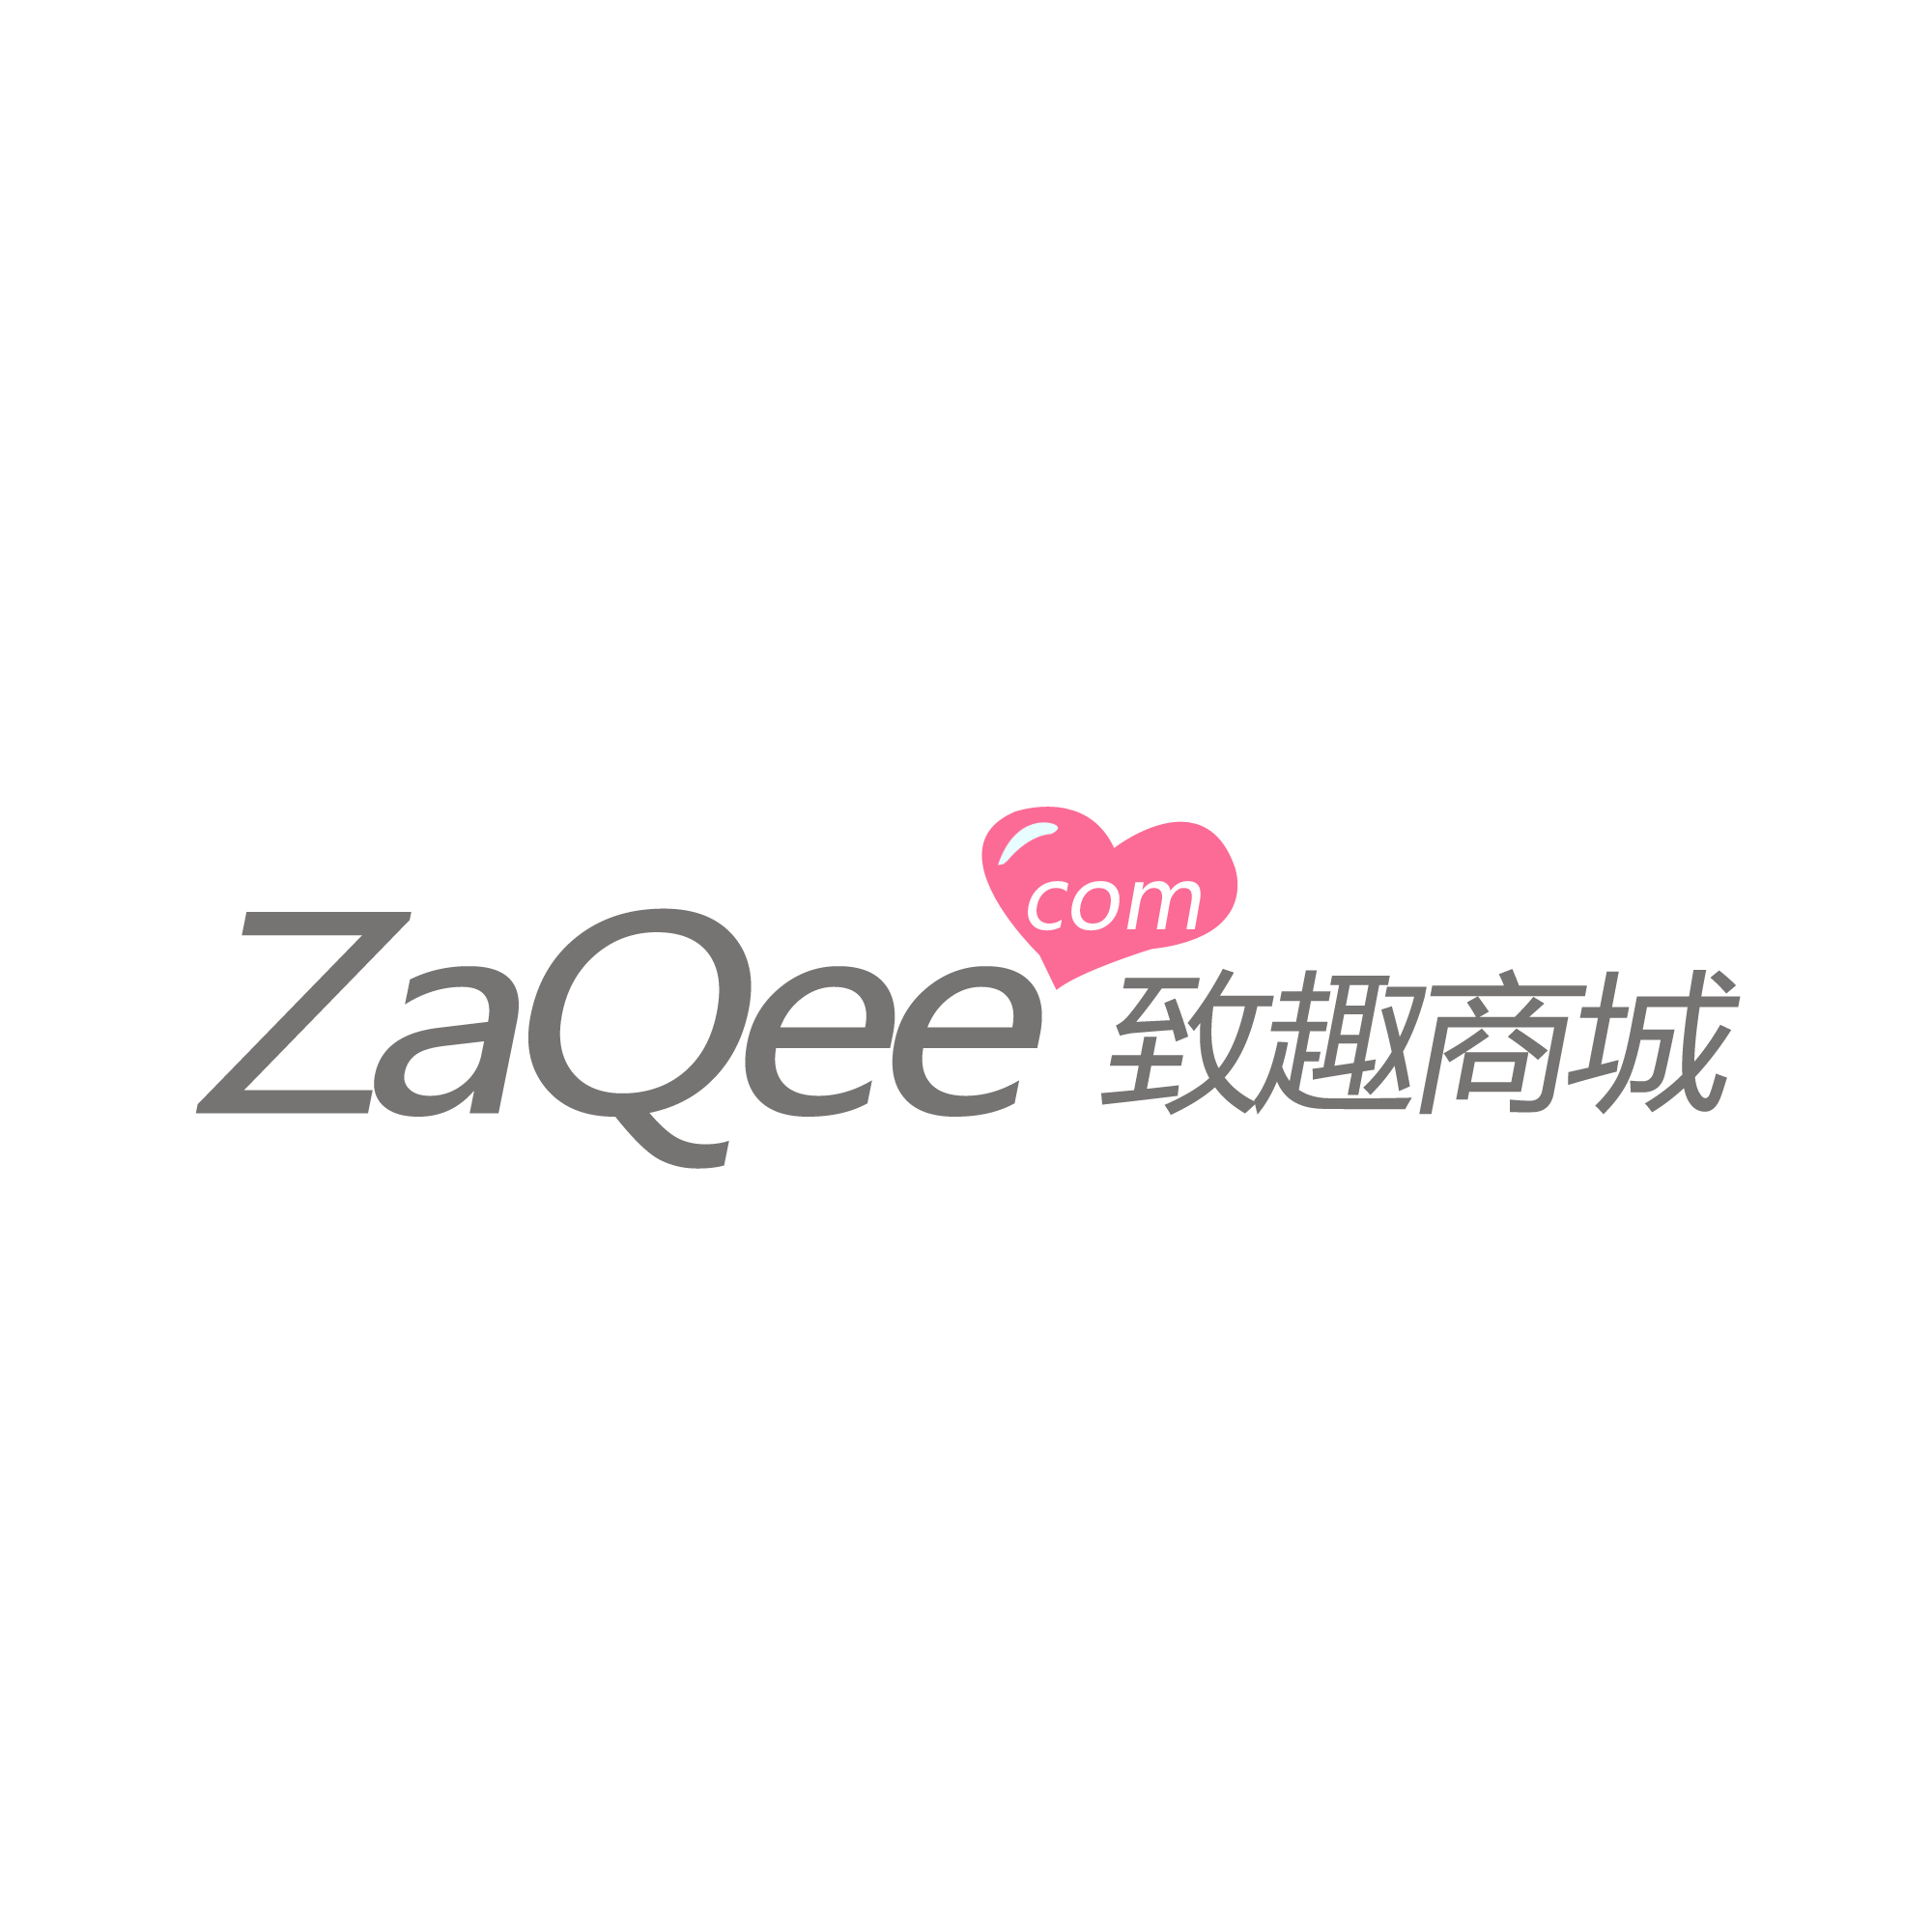 ZaQee致趣logo